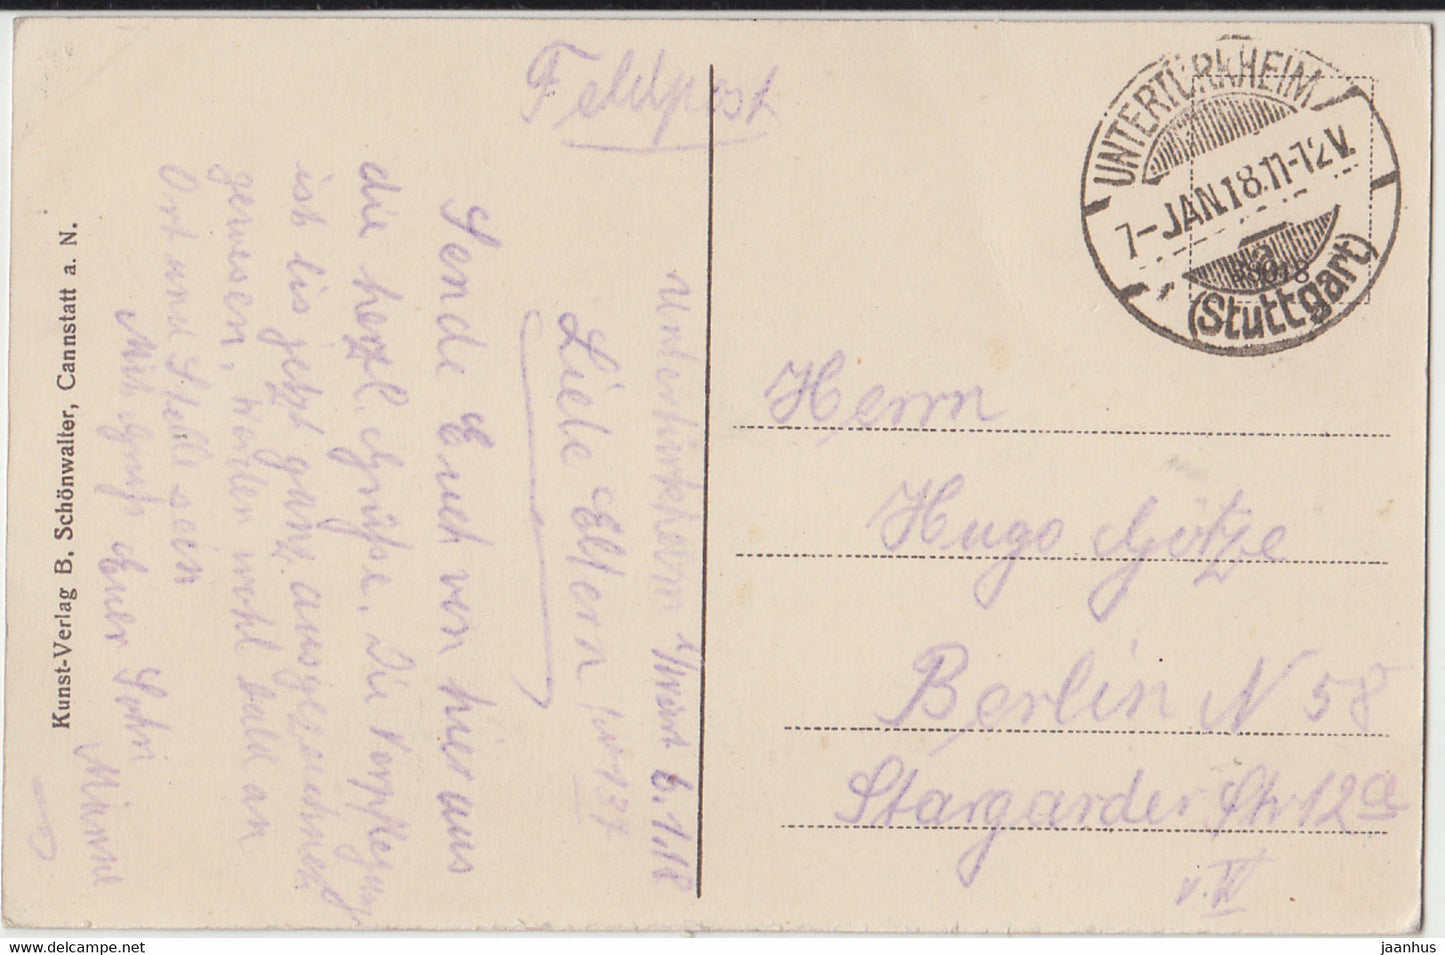 Unterturkheim - Feldpost - carte postale ancienne - 1918 - Allemagne - utilisé